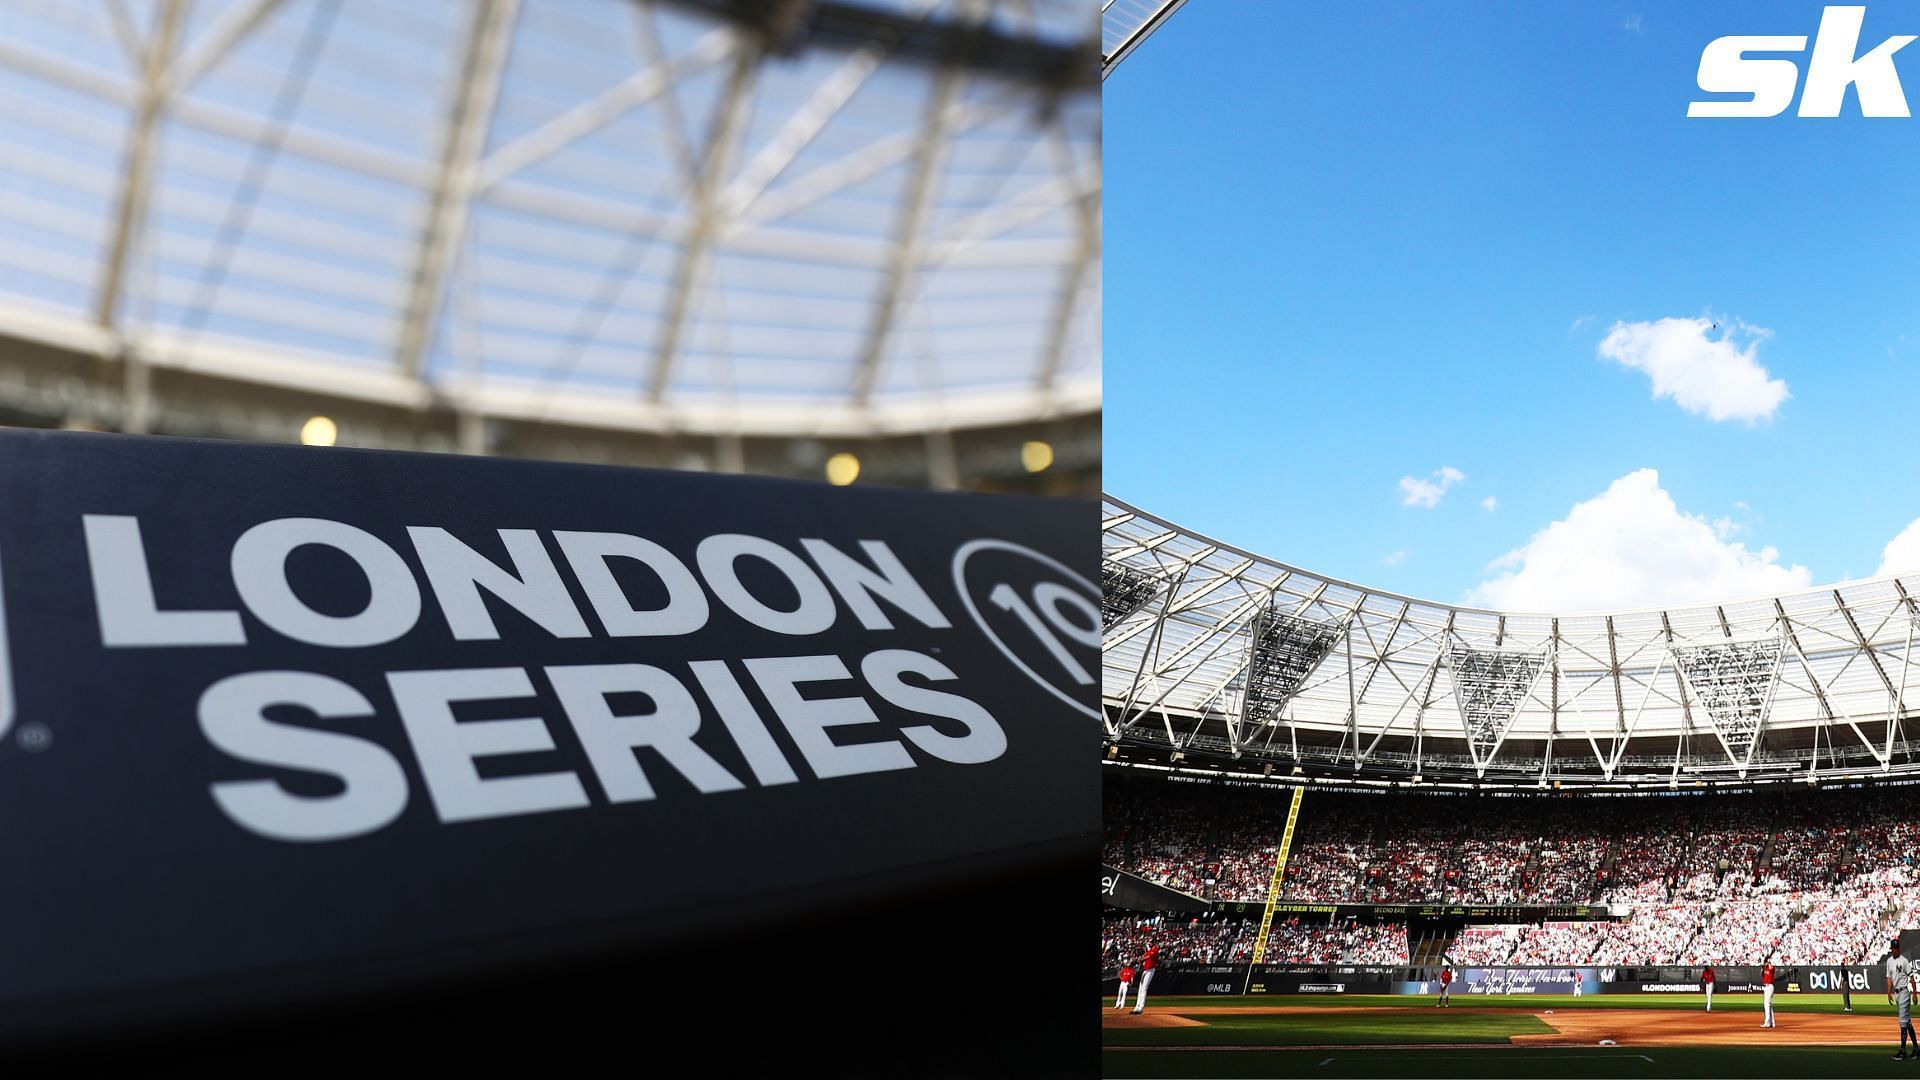 The MLB London Series will start on June 24